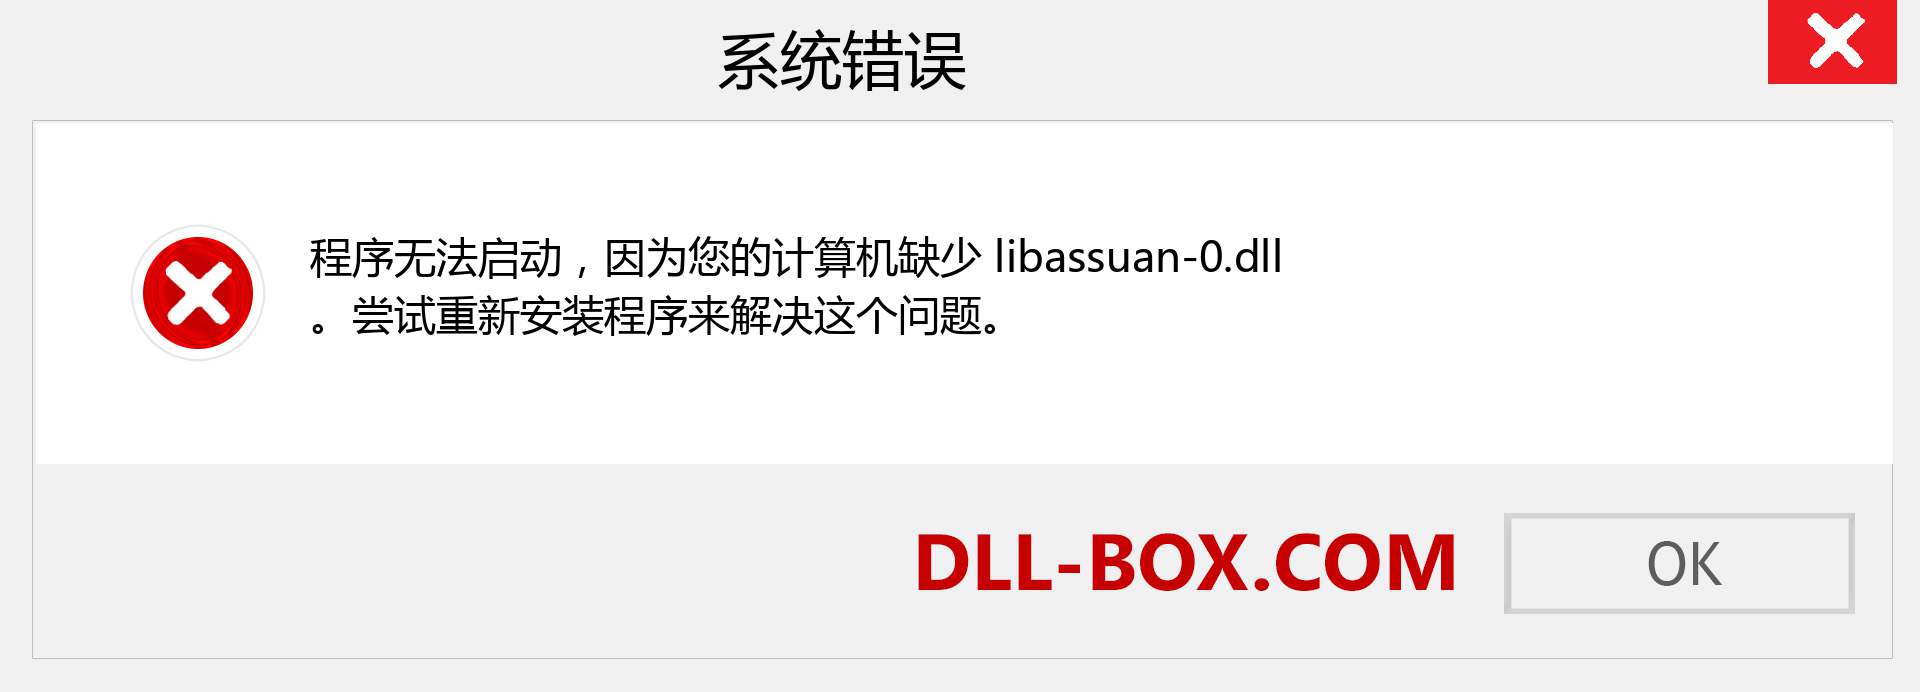 libassuan-0.dll 文件丢失？。 适用于 Windows 7、8、10 的下载 - 修复 Windows、照片、图像上的 libassuan-0 dll 丢失错误